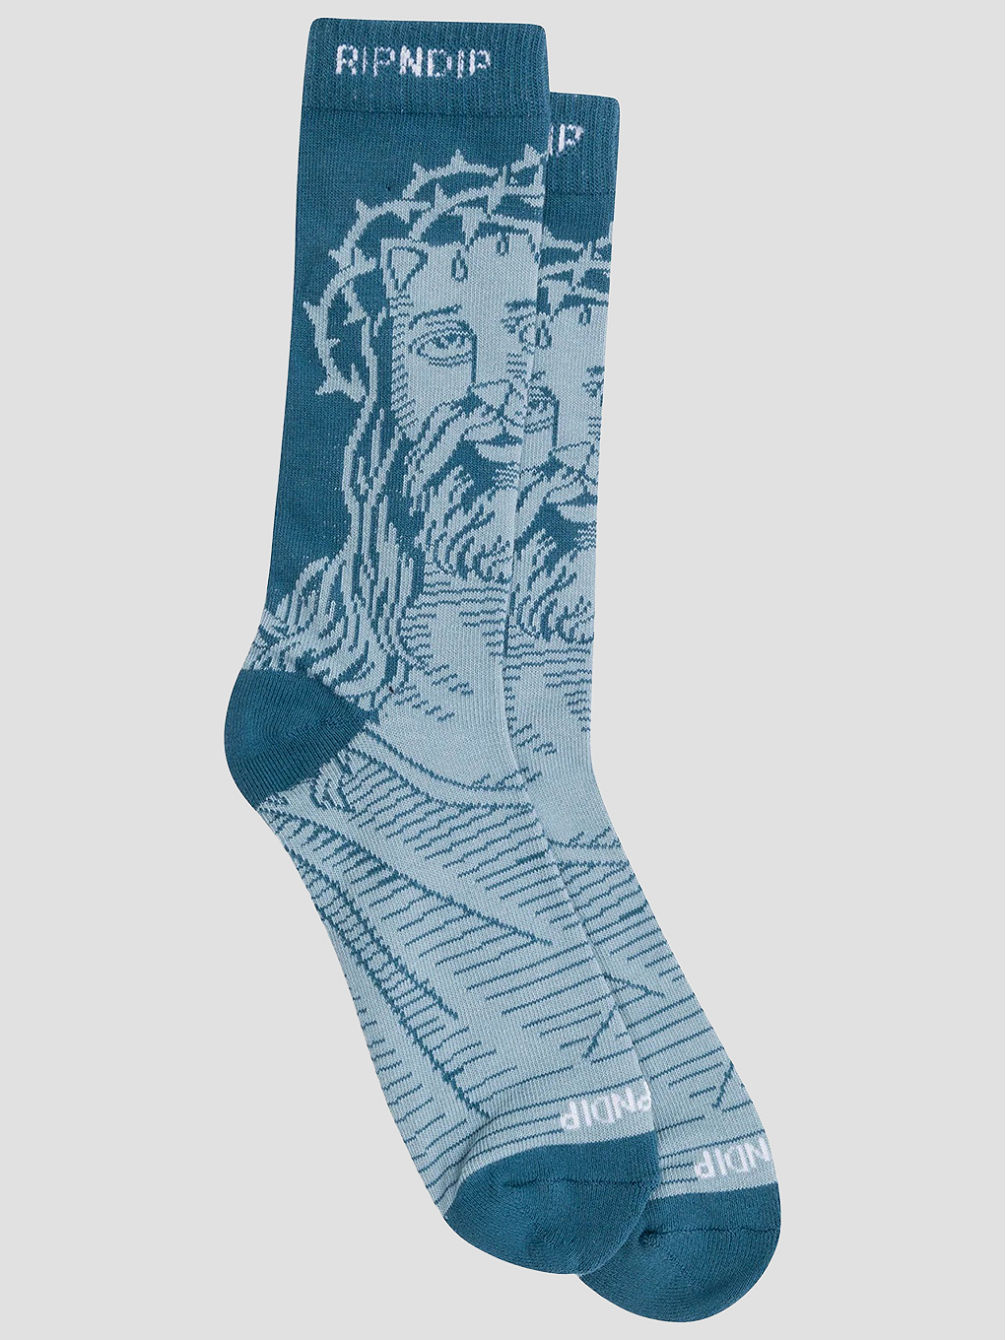 Lord Savior Nerm Socks